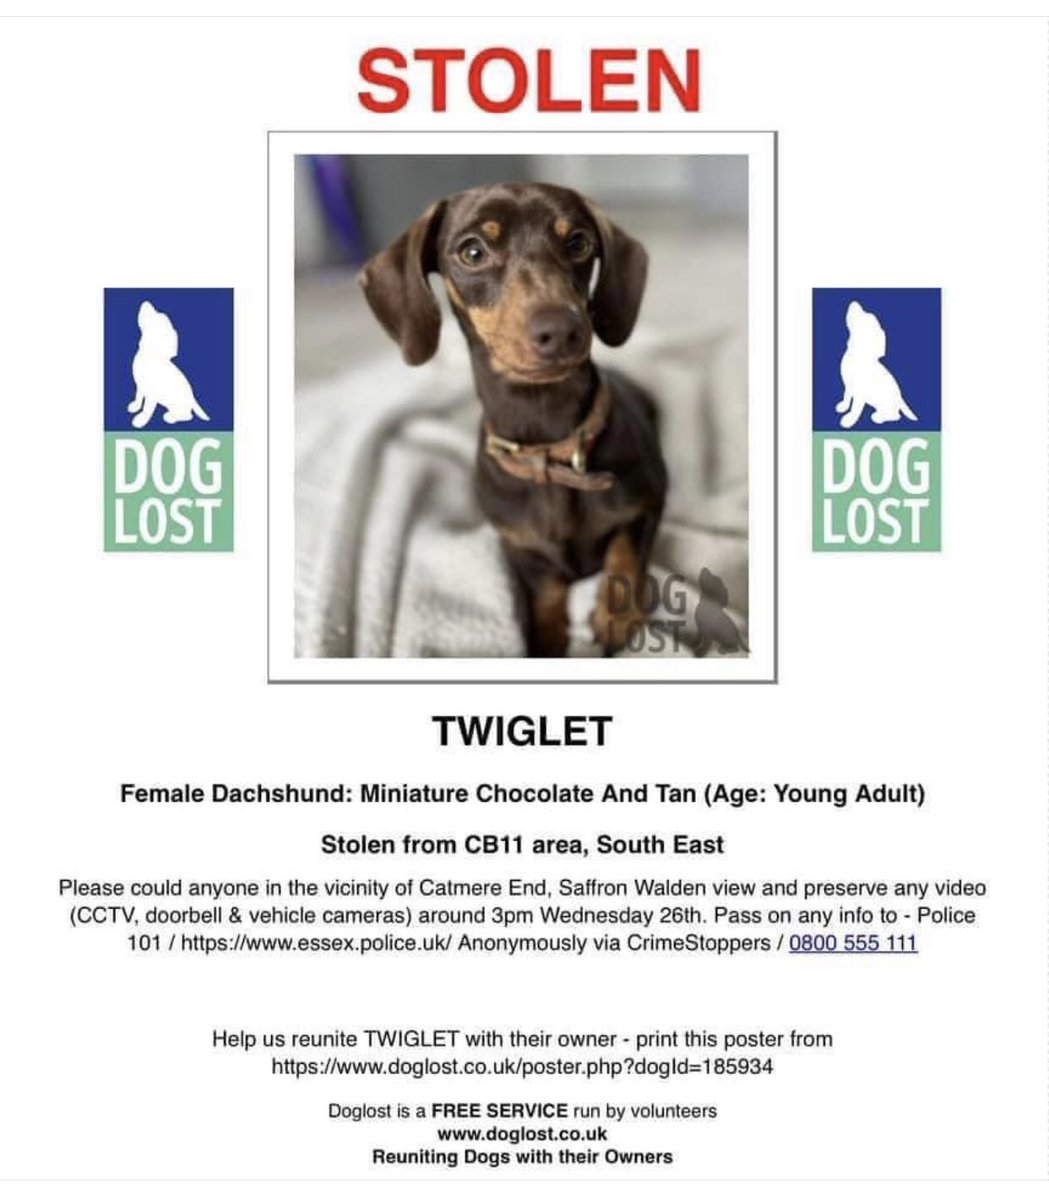 #BringTwigletHome #stolendogs #missingdogs #rehomehour #PetTheftReform